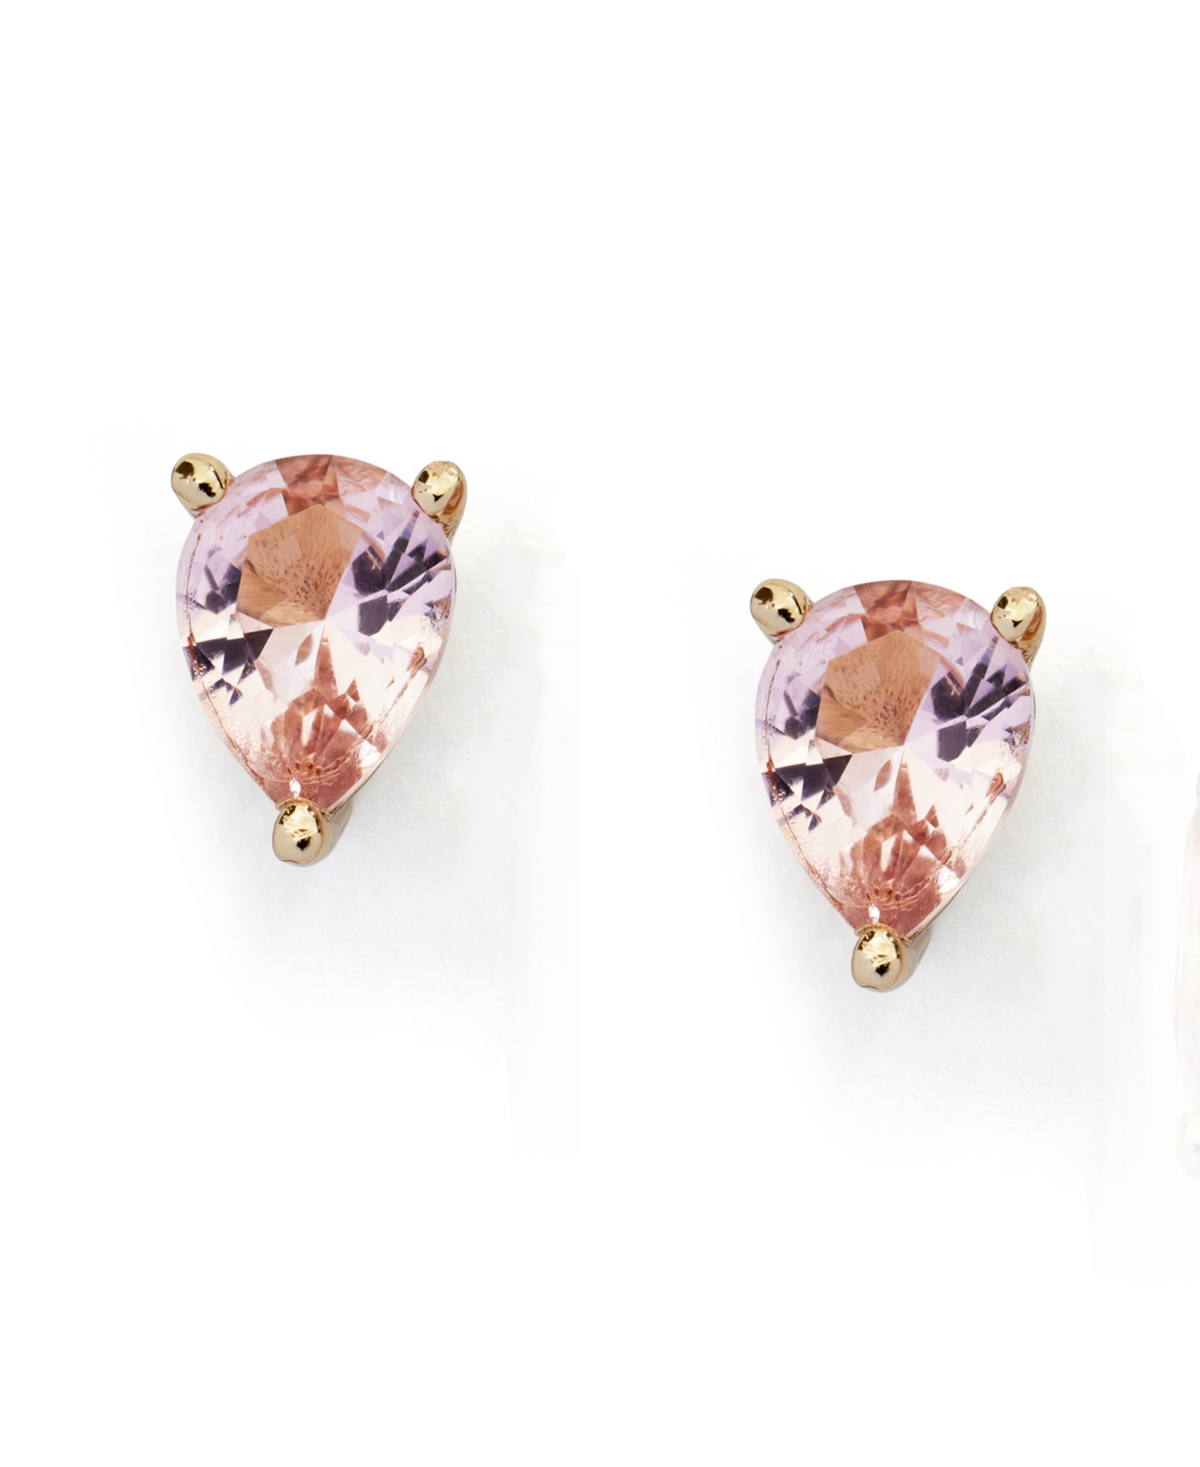 Cubic Zirconia Pear Cut Stud Earrings - Light Rose, Gold